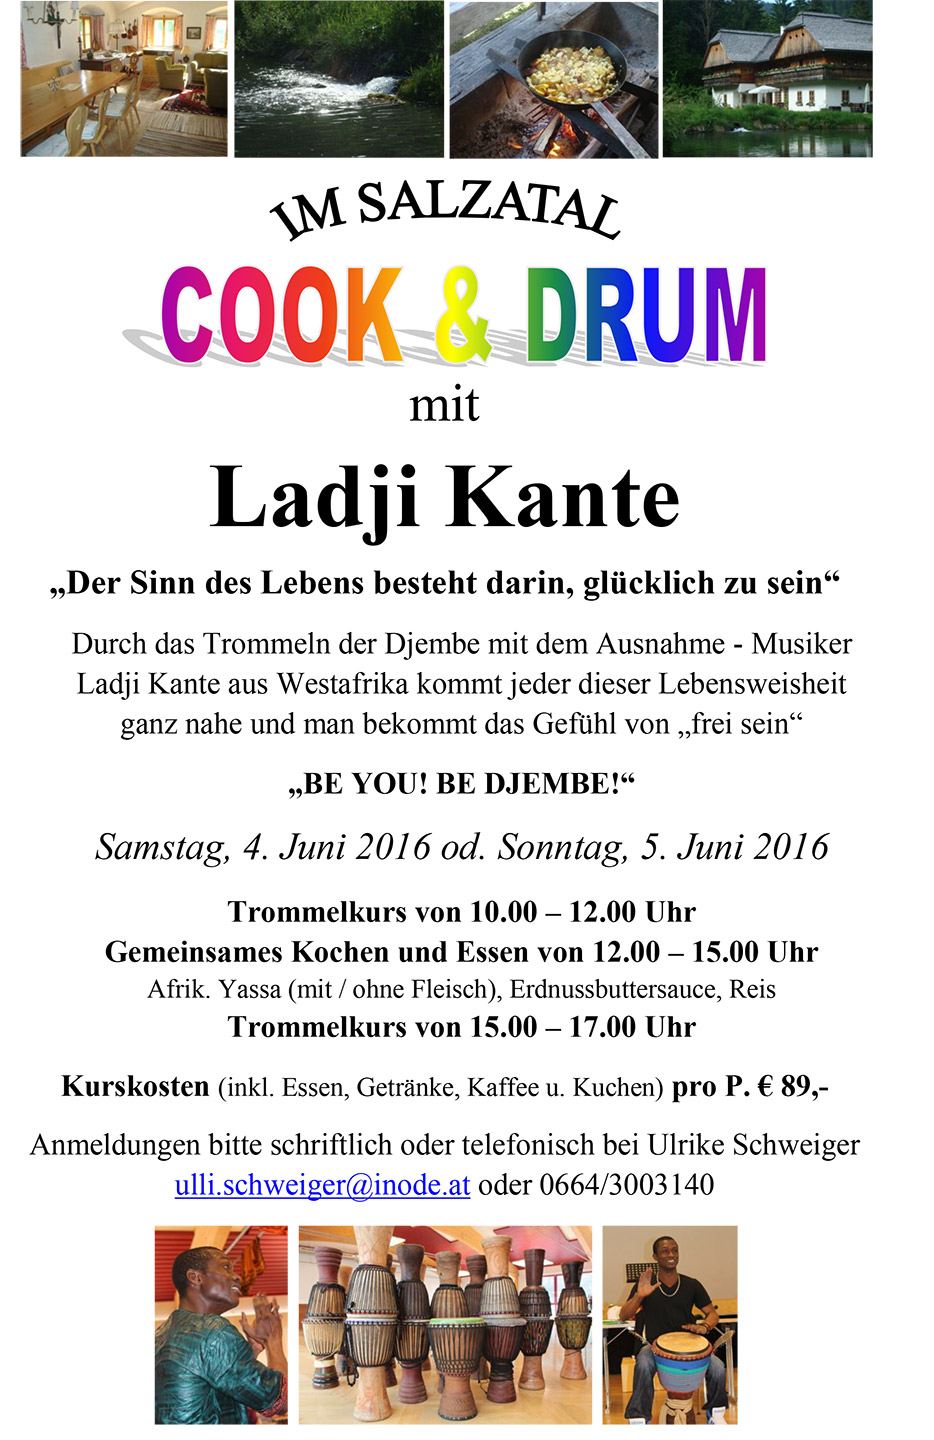 Cook-Drum-Ladji-Kante-Salzatal_